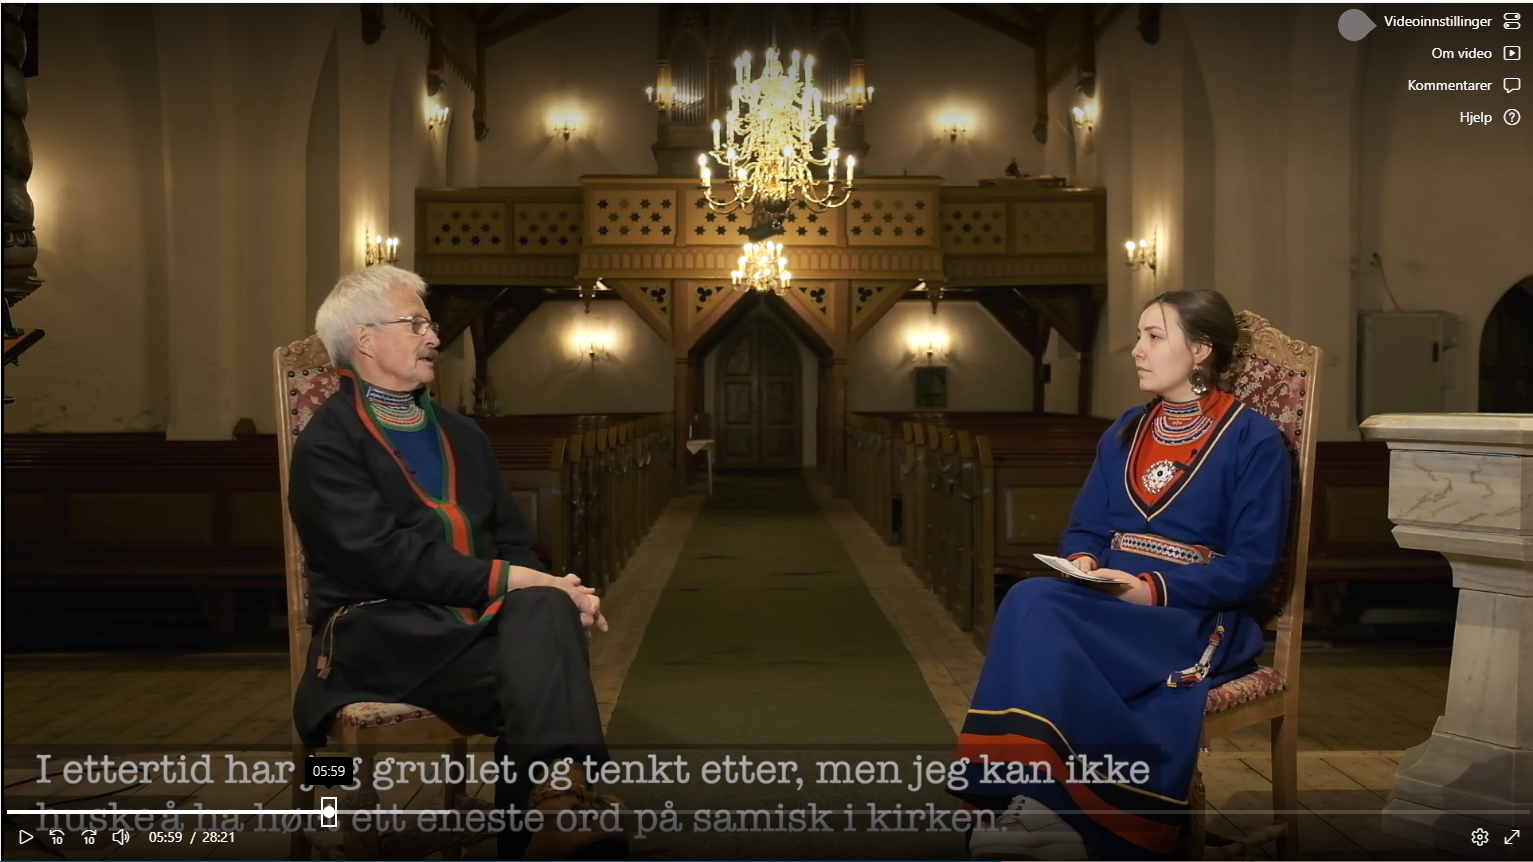 Veien til presteyrket - intervju med Bierna Leine Bientie /// Filme goerehtimmie